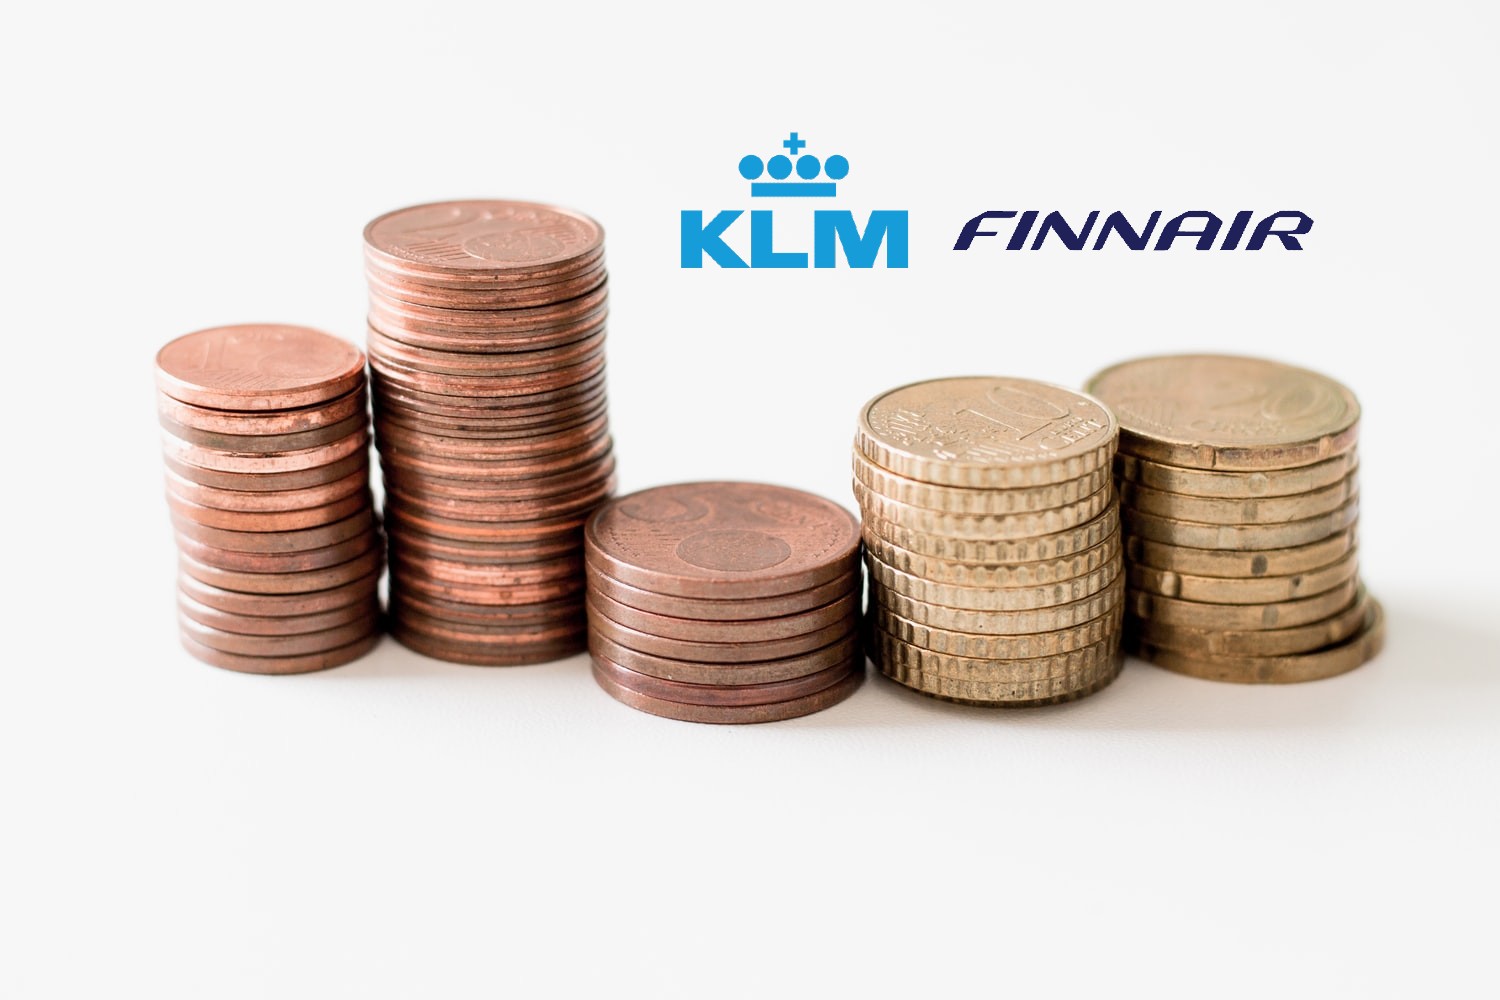 monedas de euros, logos de KLM y Finnair